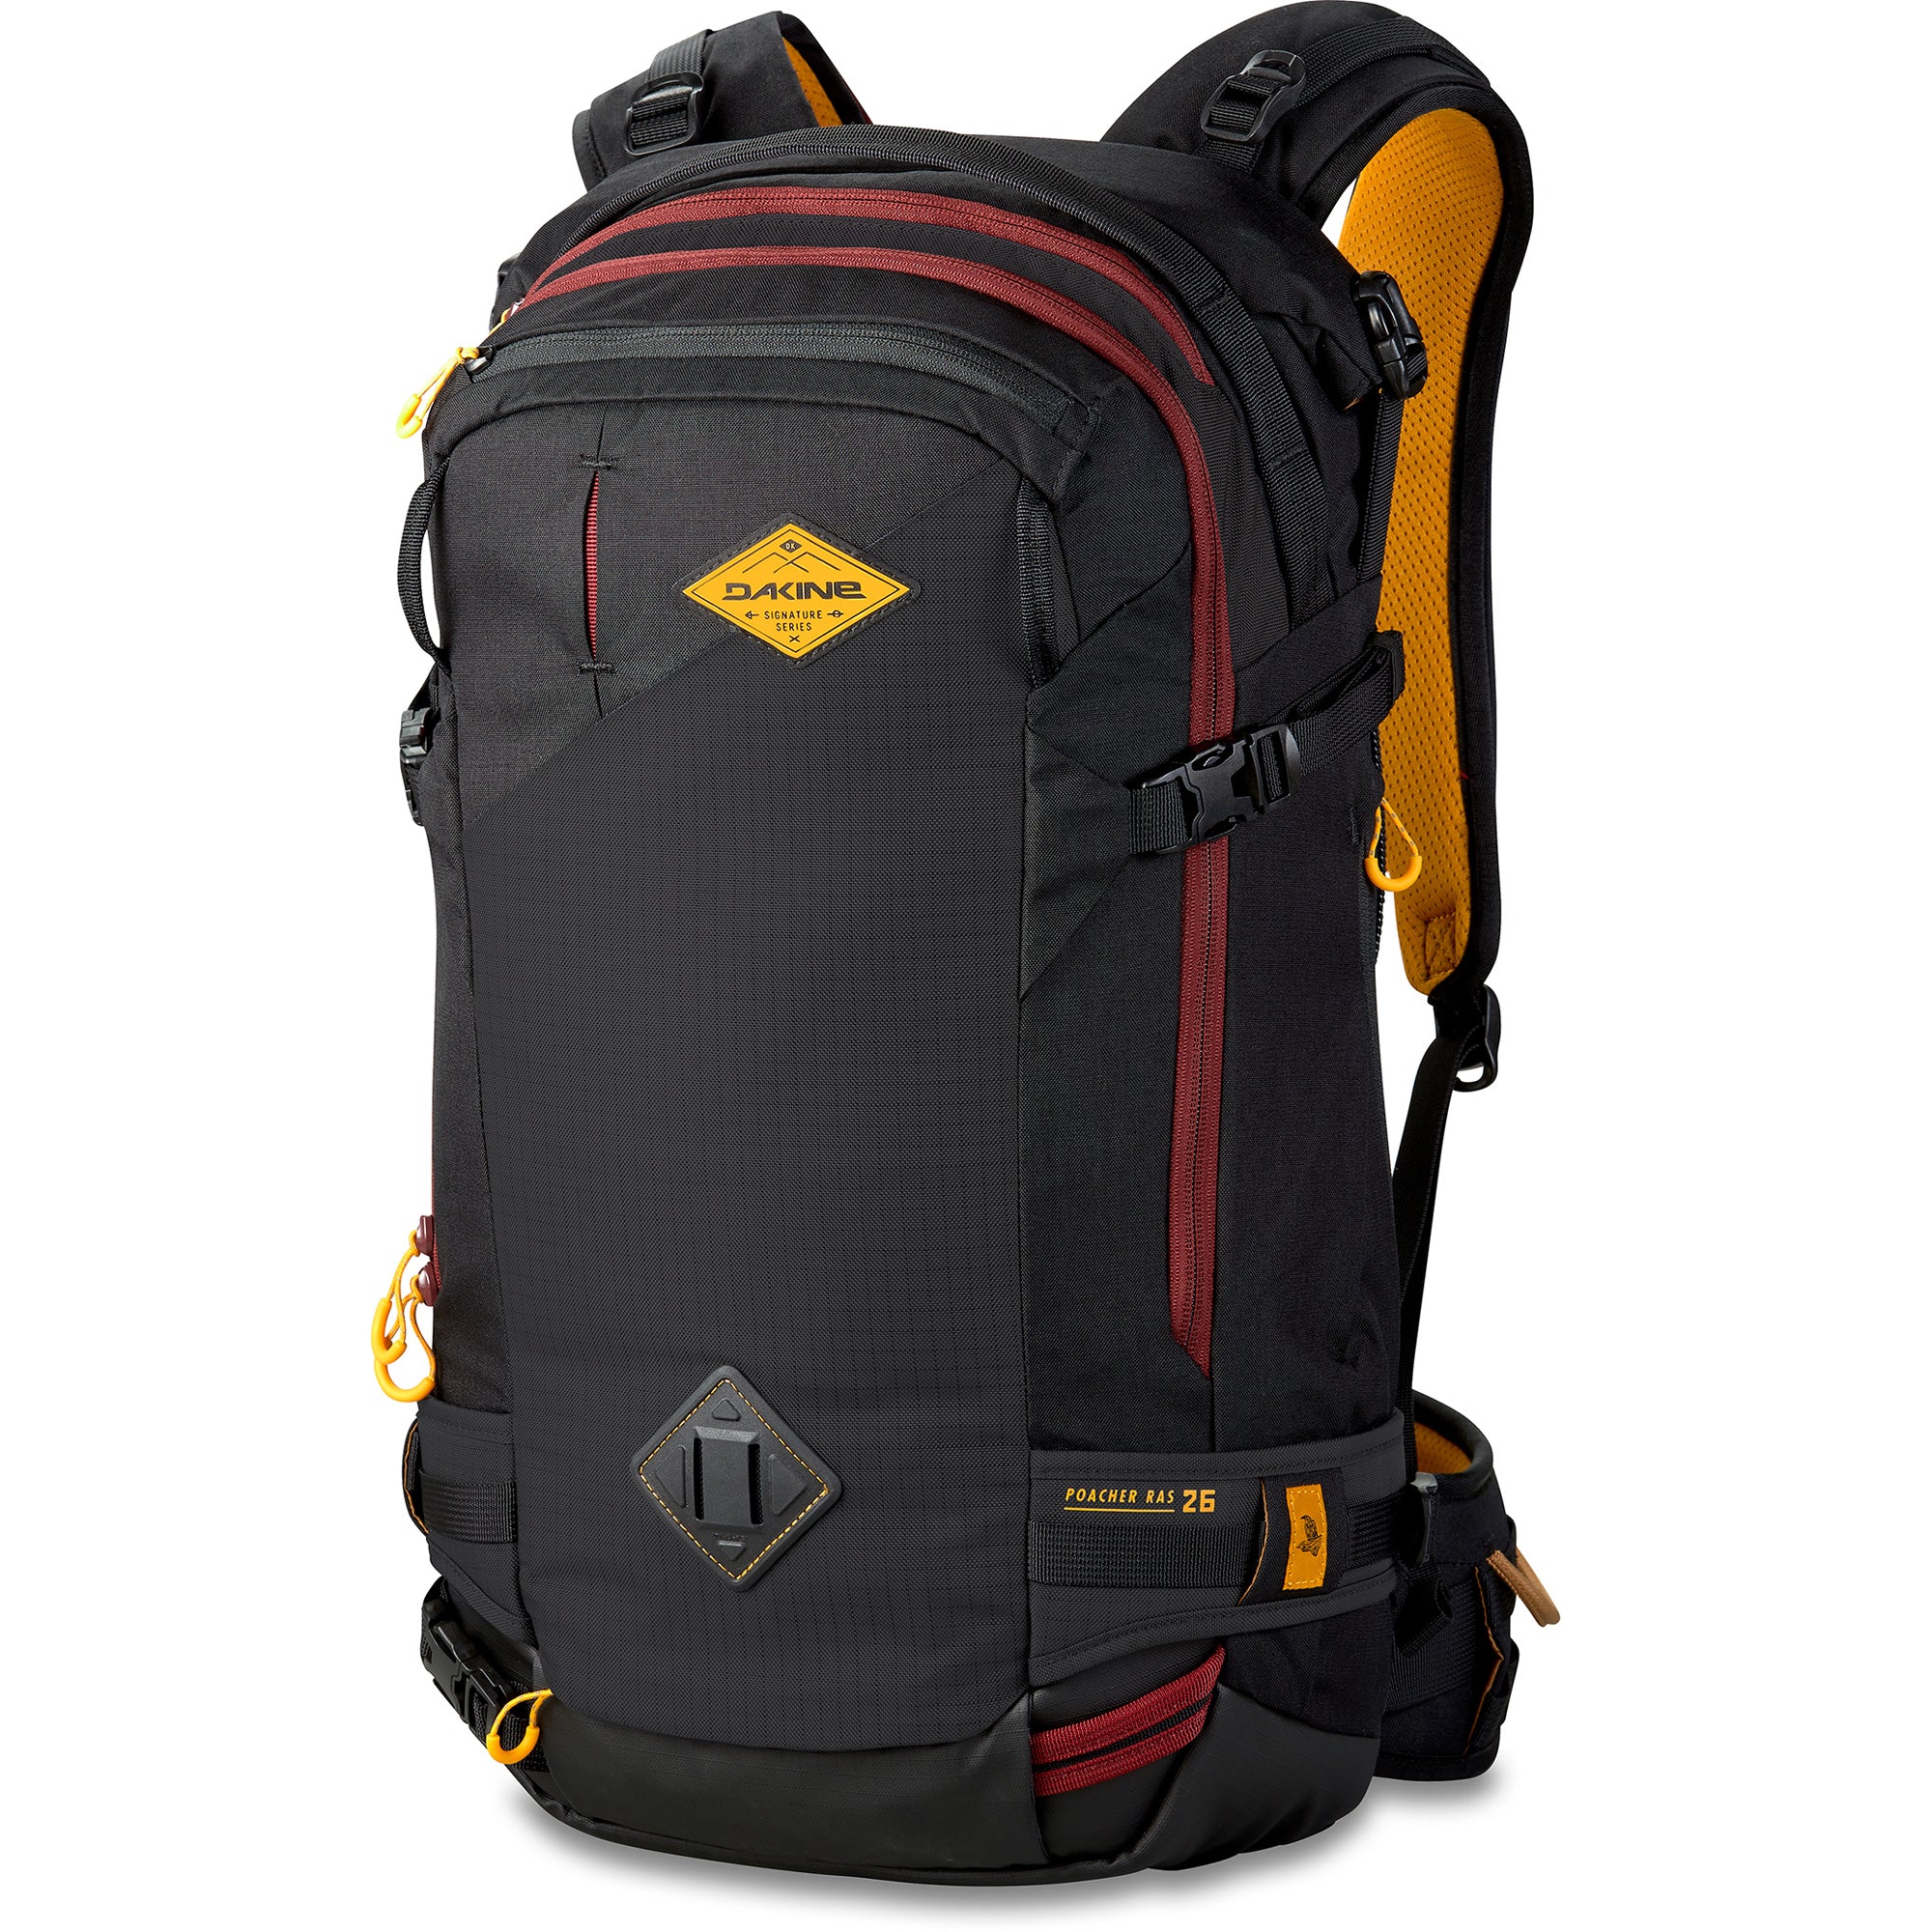 特別価格Dakine Team Poacher 32L Backpack - Men's, Chris Benchetler